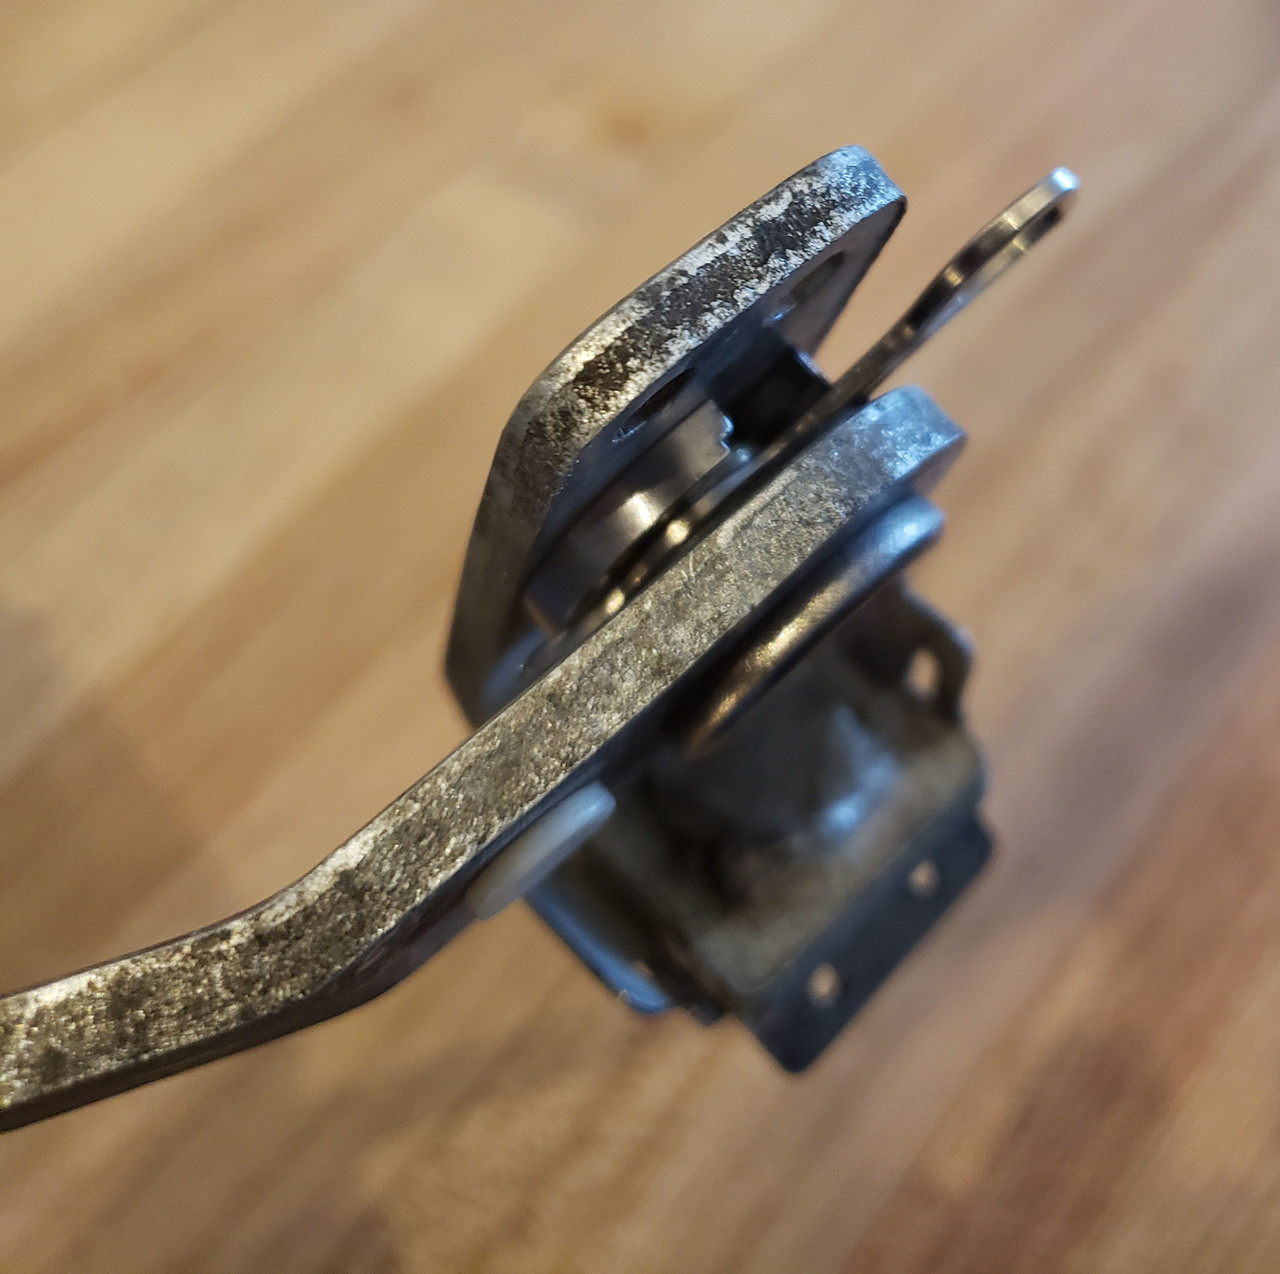 Cadillac SRX shifter rod replacement bushing repair kit